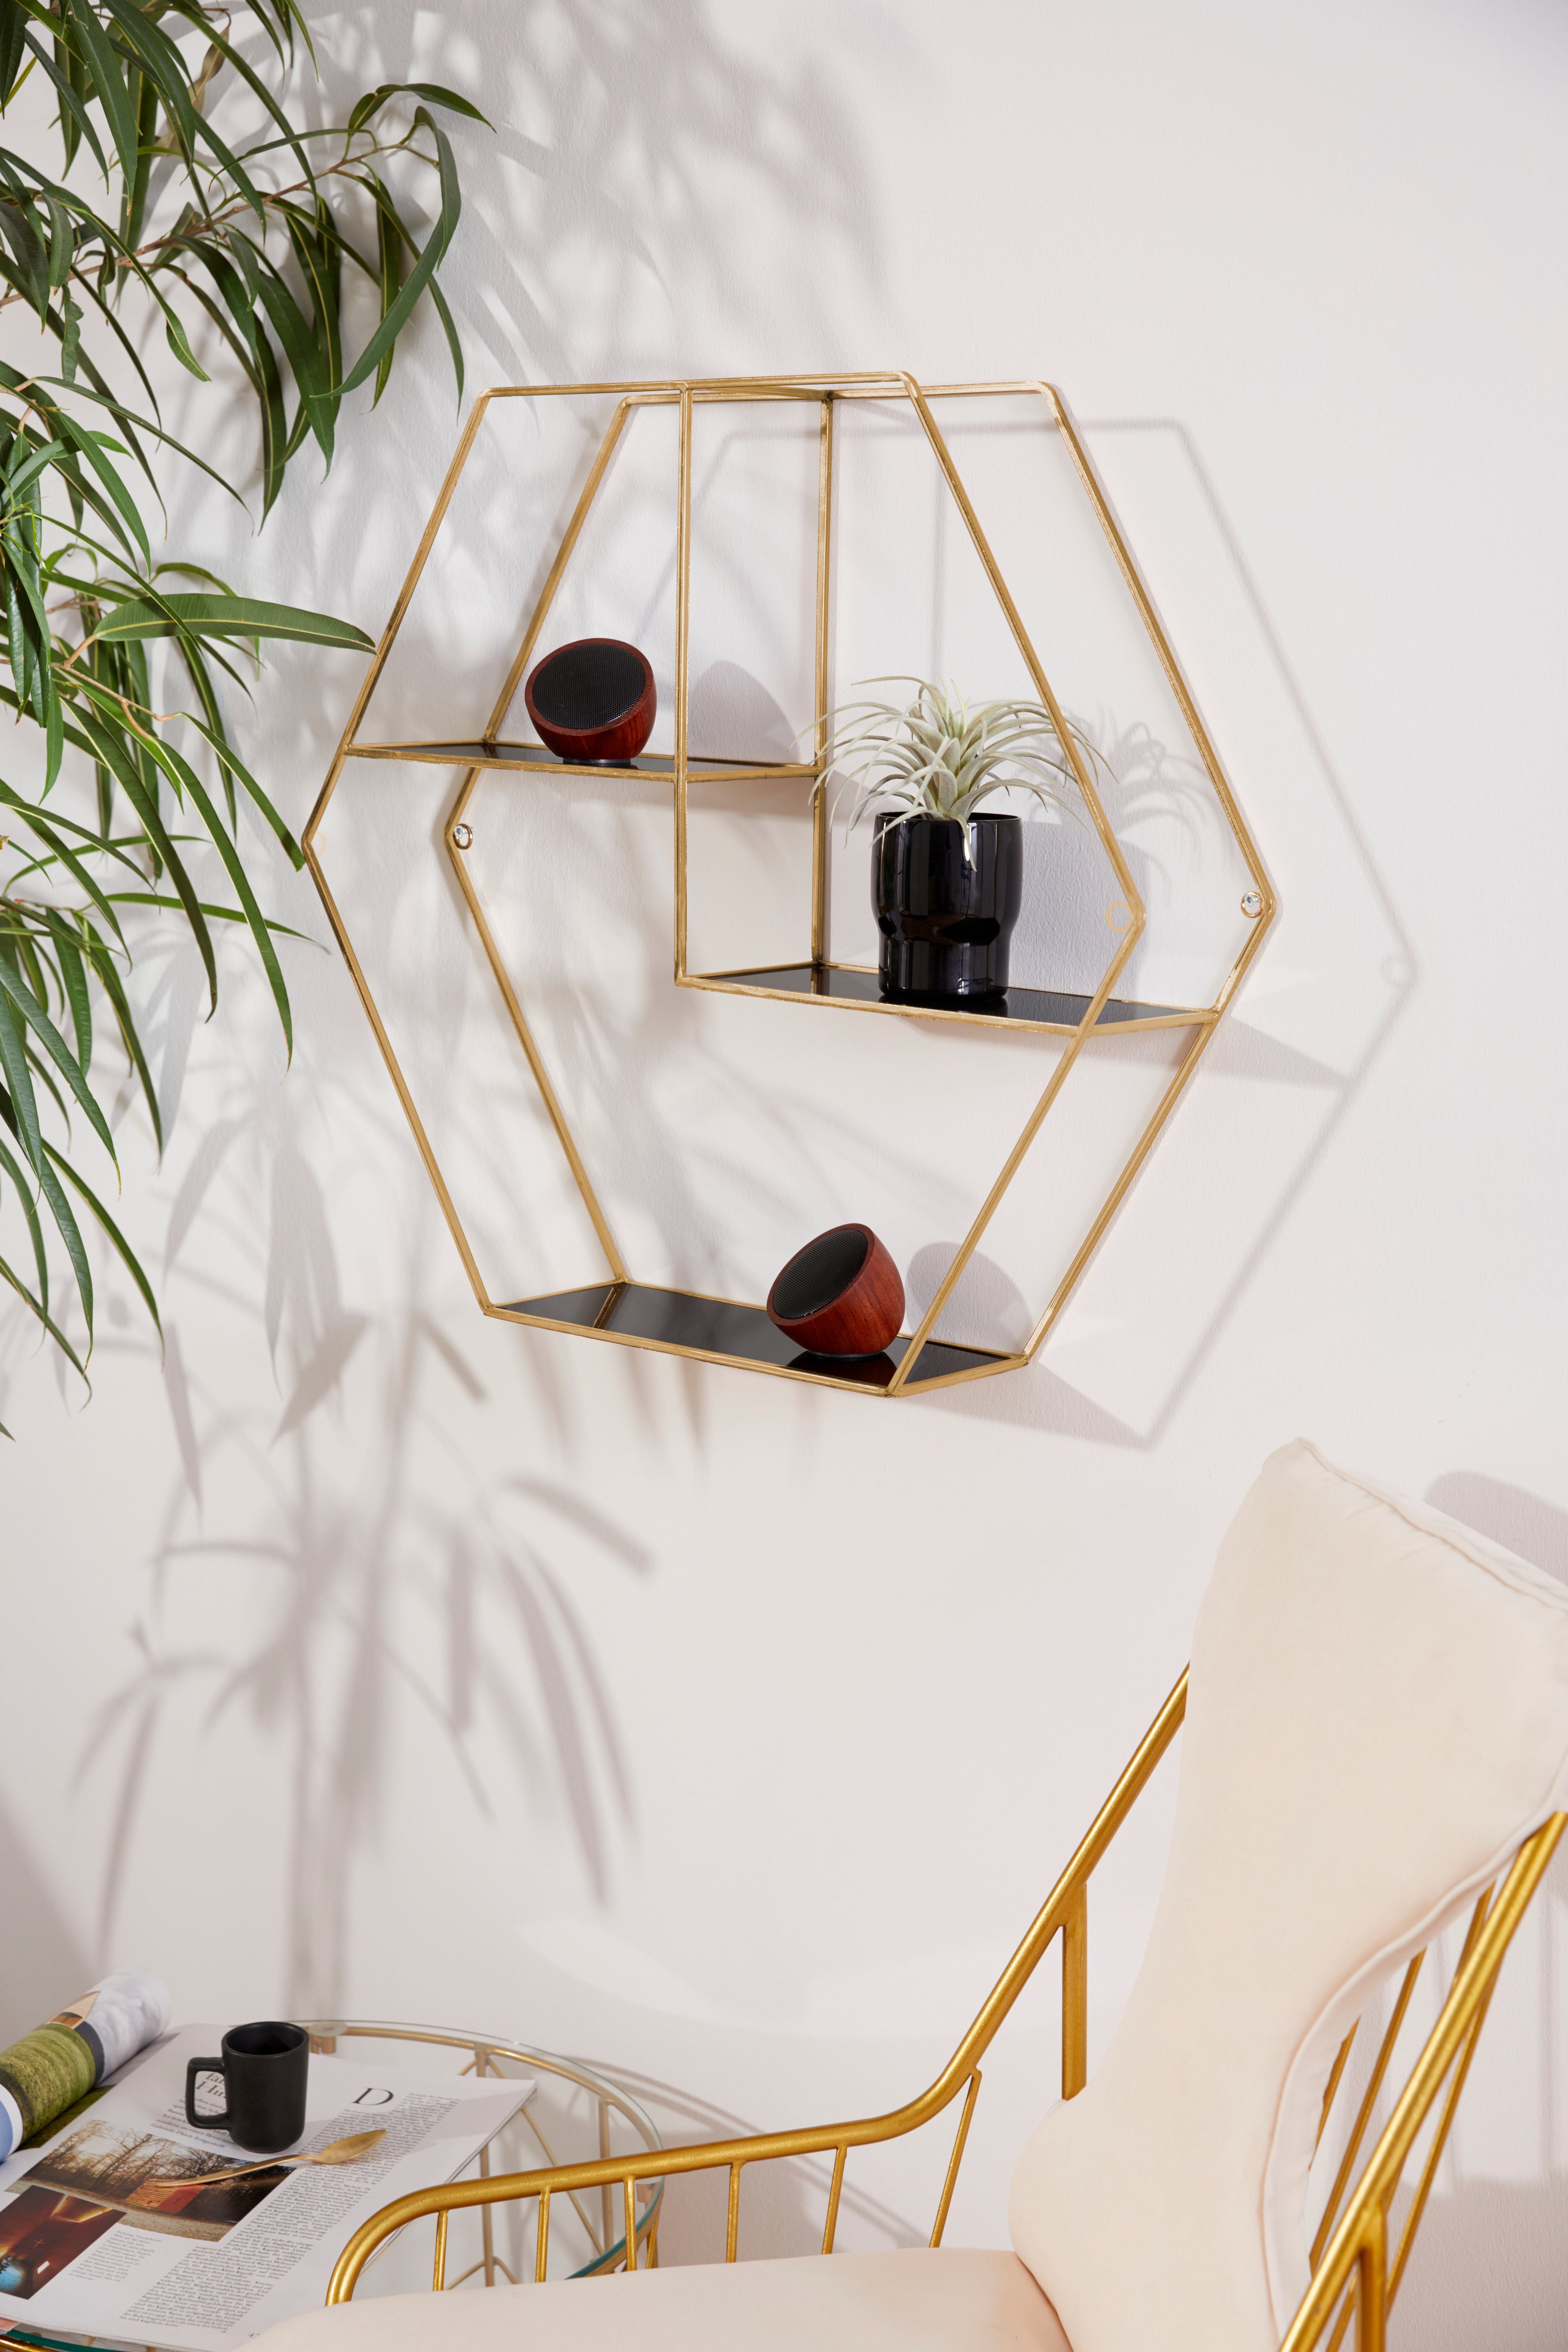 Leonique Deko-Wandregal Hexagon, modernem in sechseckiges goldfarben, Design Element